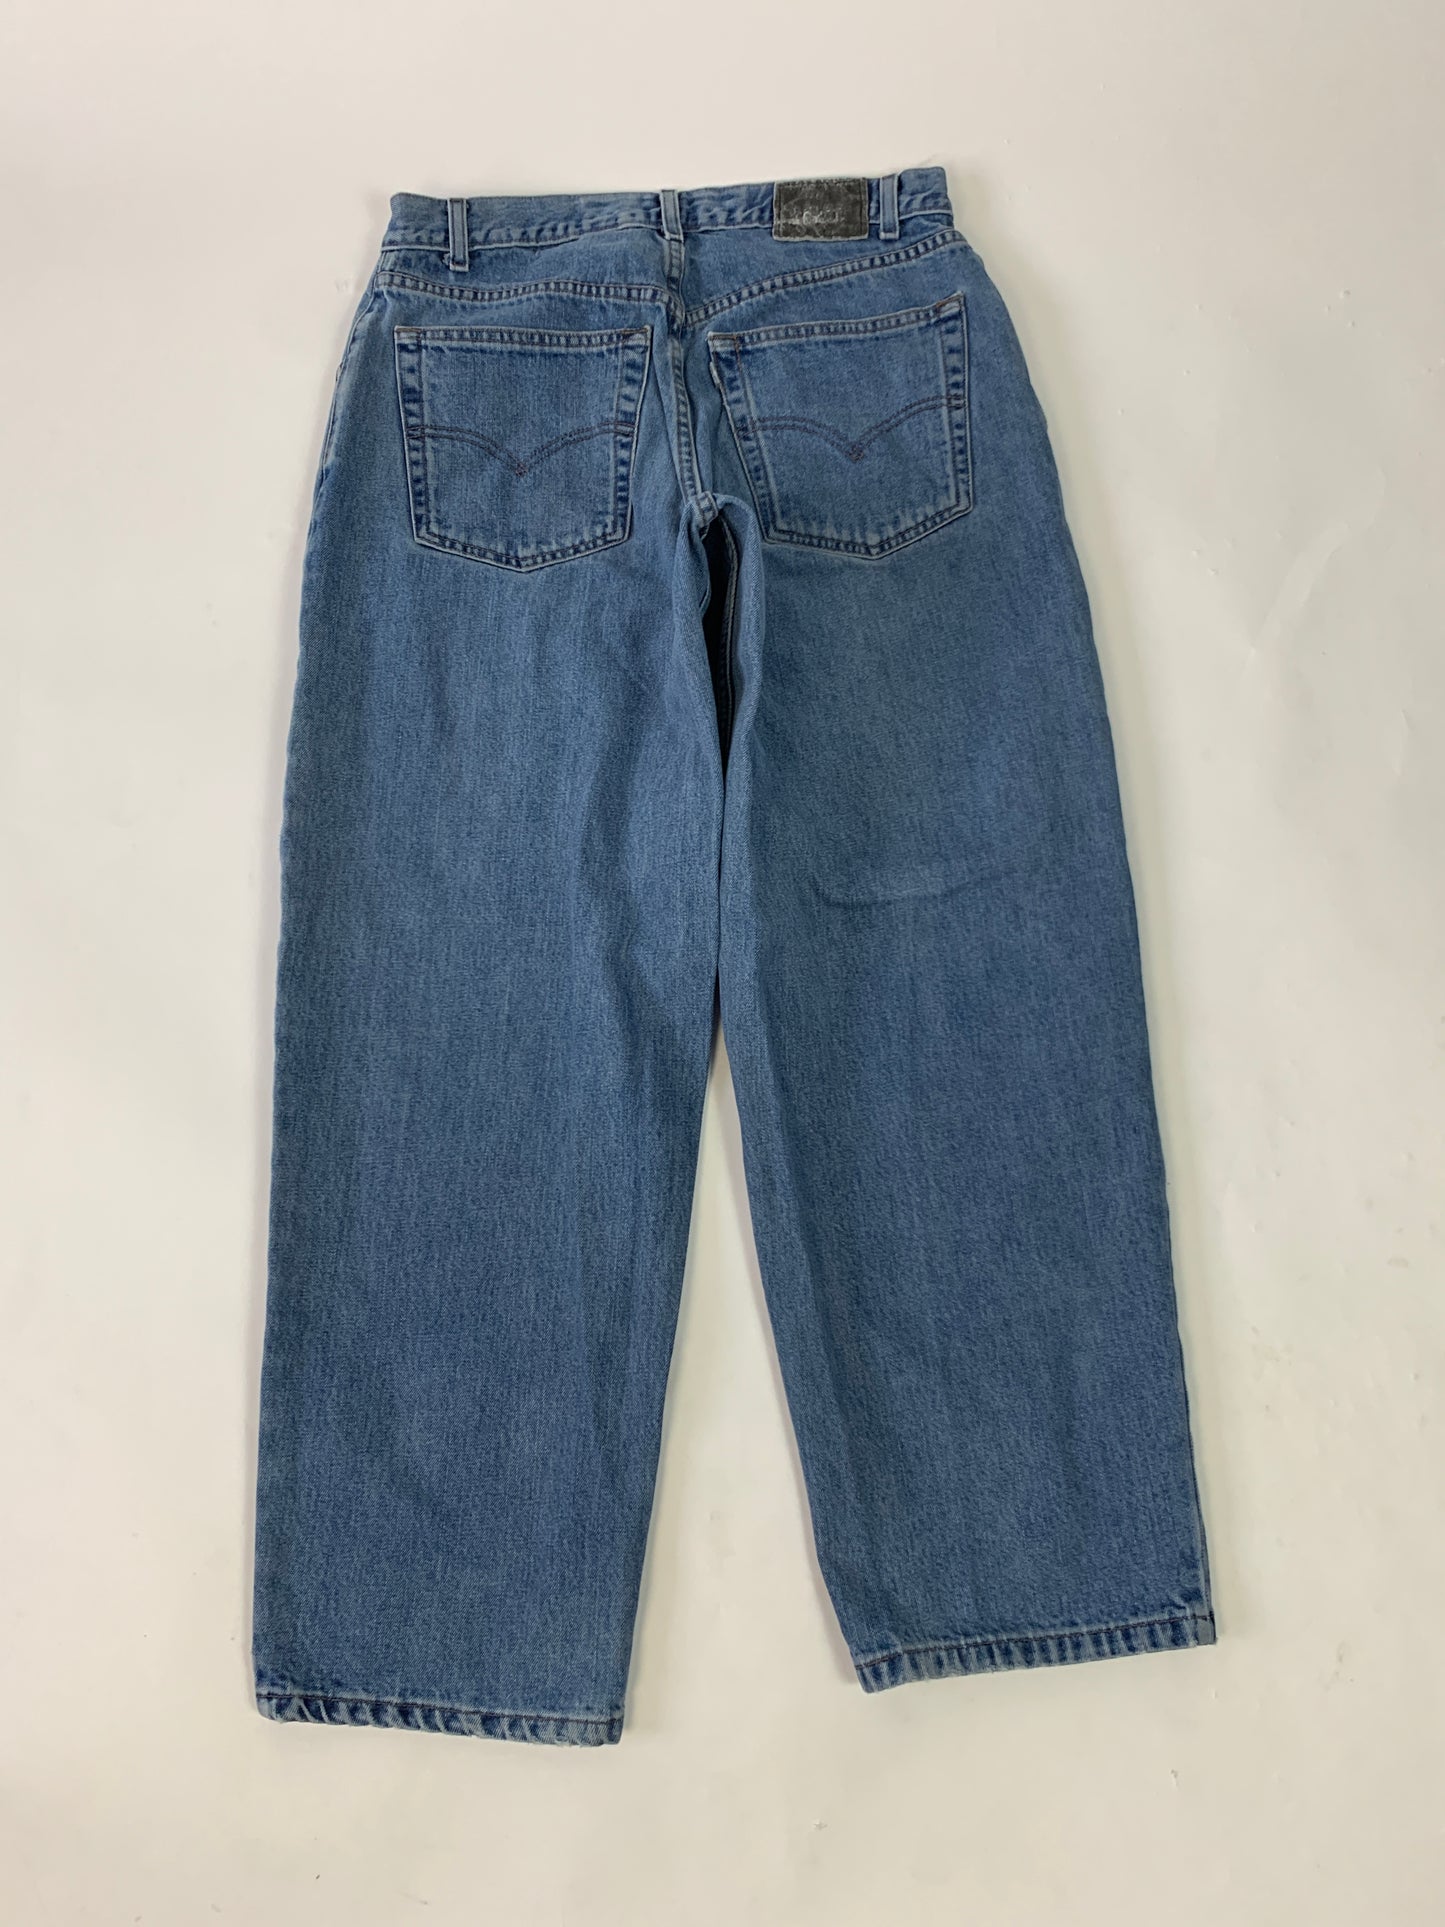 Levis Silvertab Baggy Vintage Jeans - 34 x 30